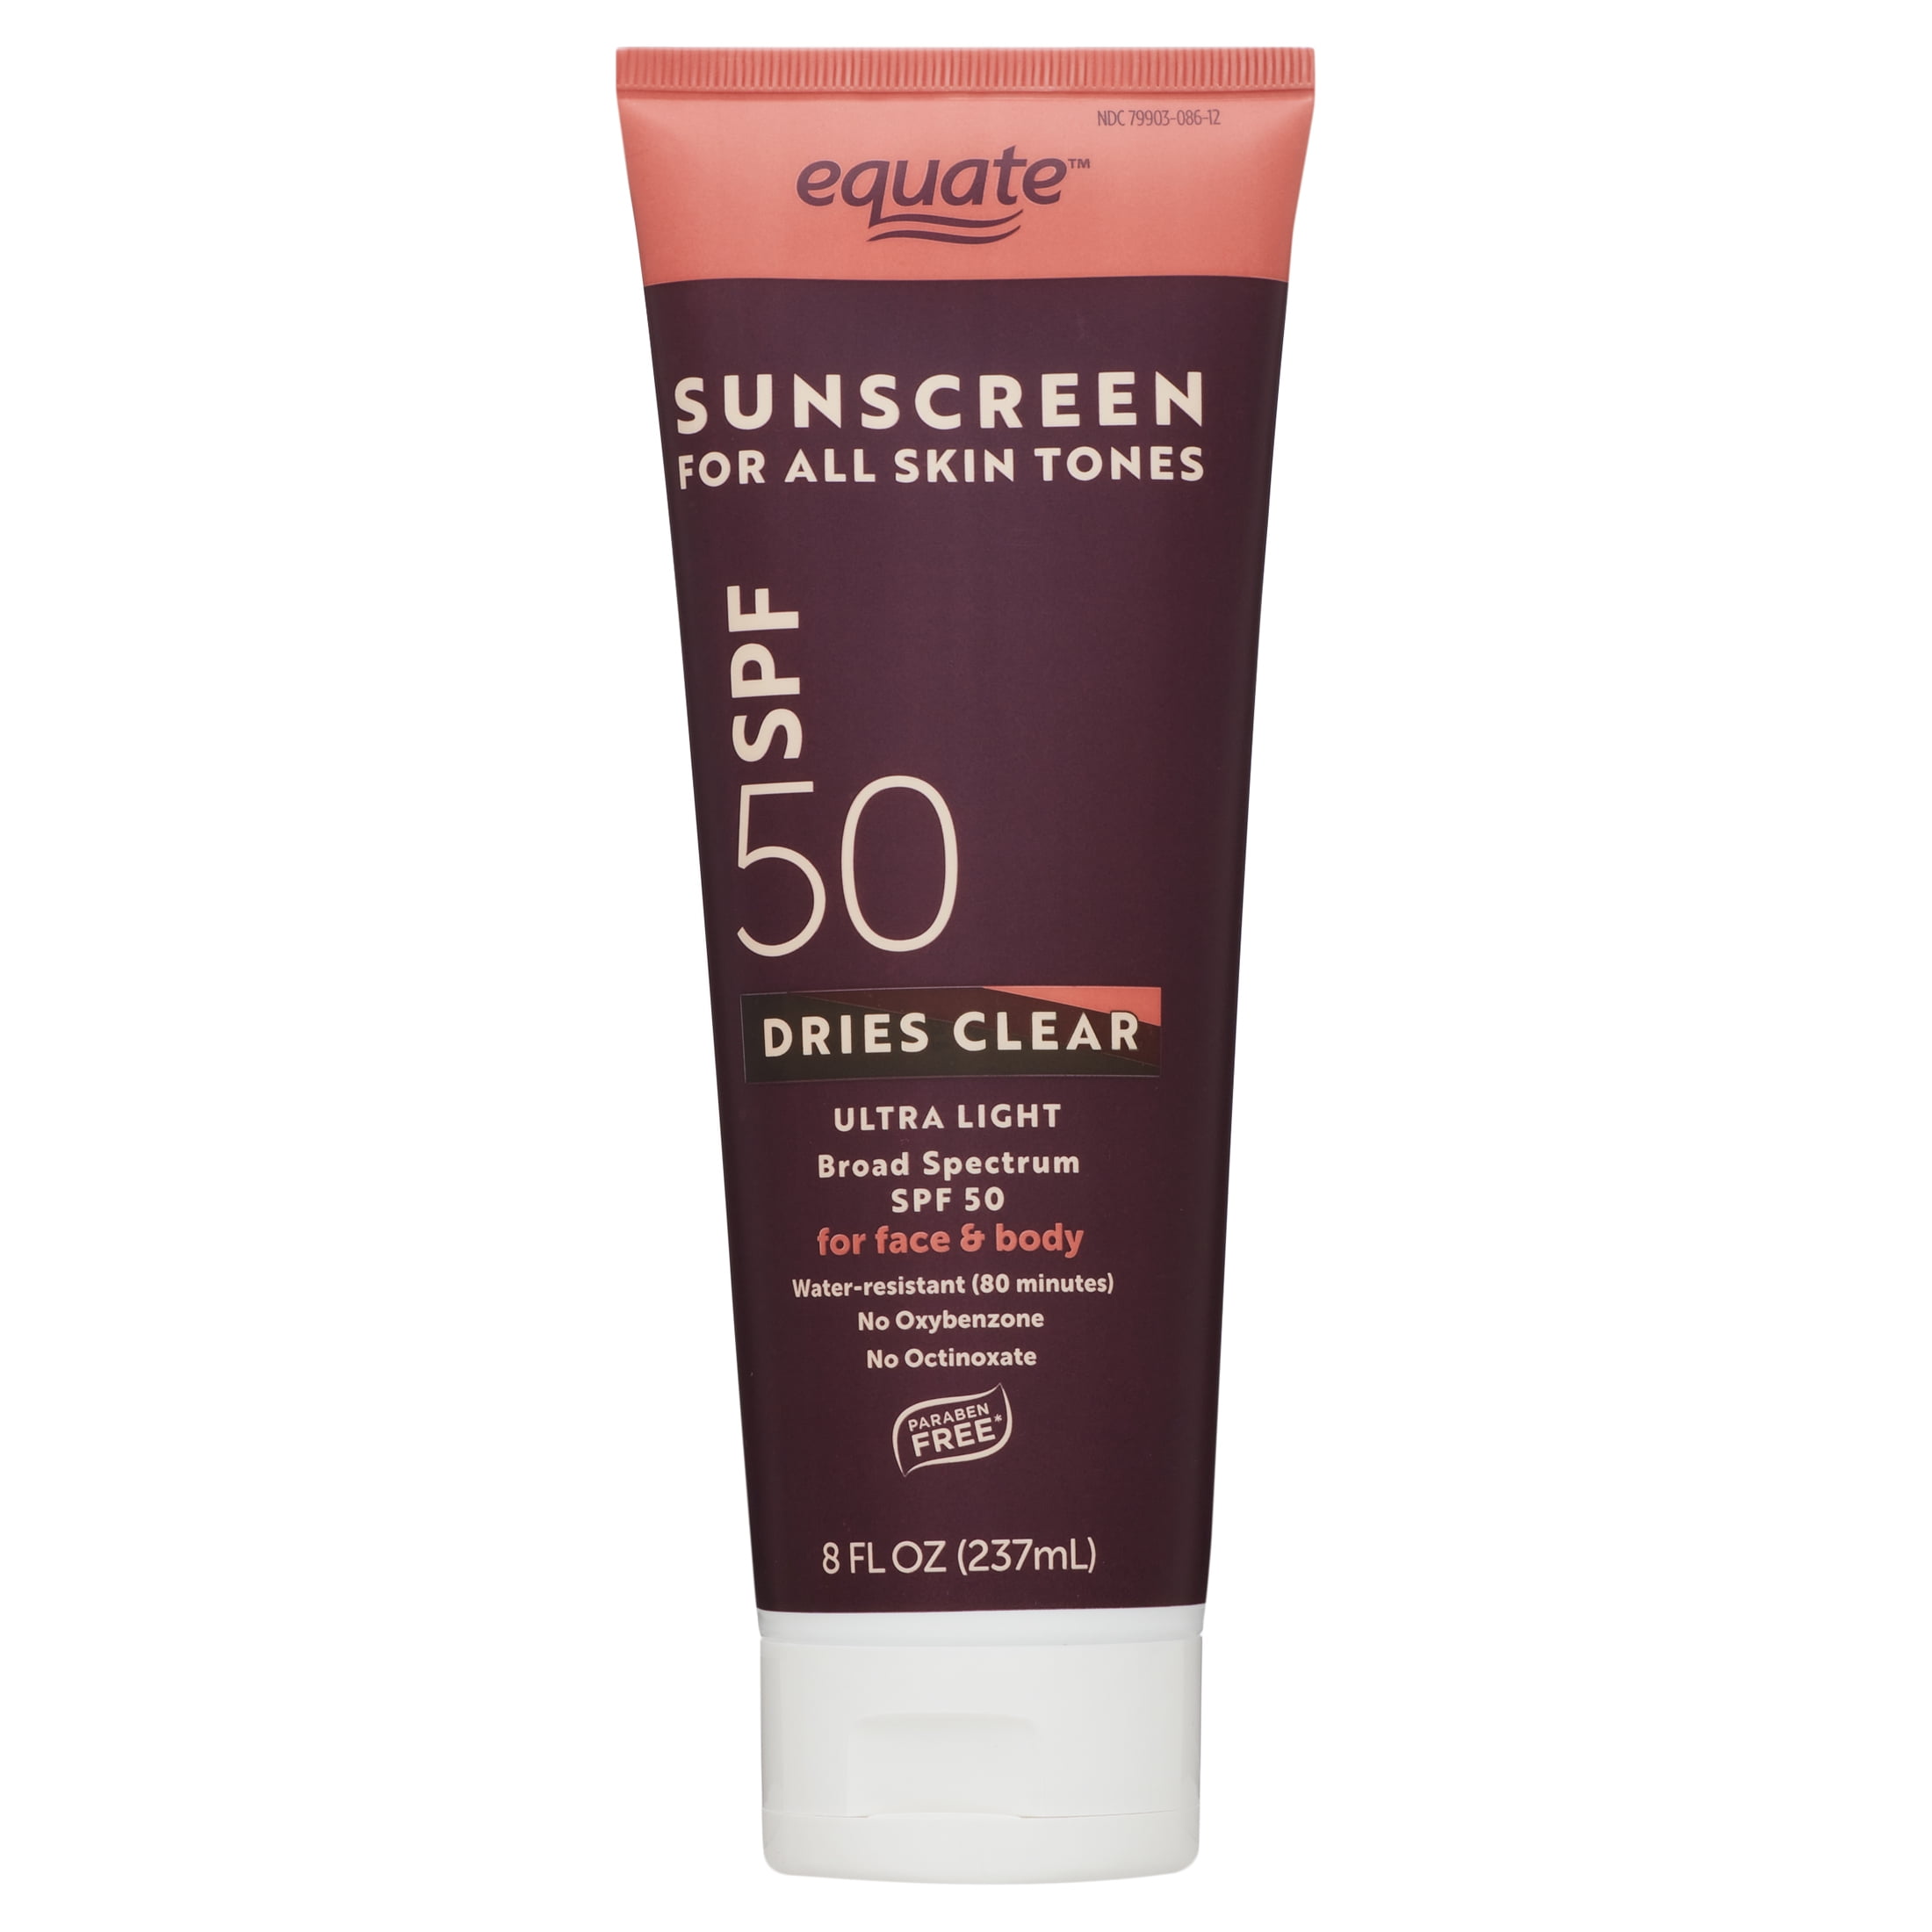 Equate Ultra Light Broad Spectrum Sunscreen Lotion for All Skin Tones, SPF 50, 8 fl oz